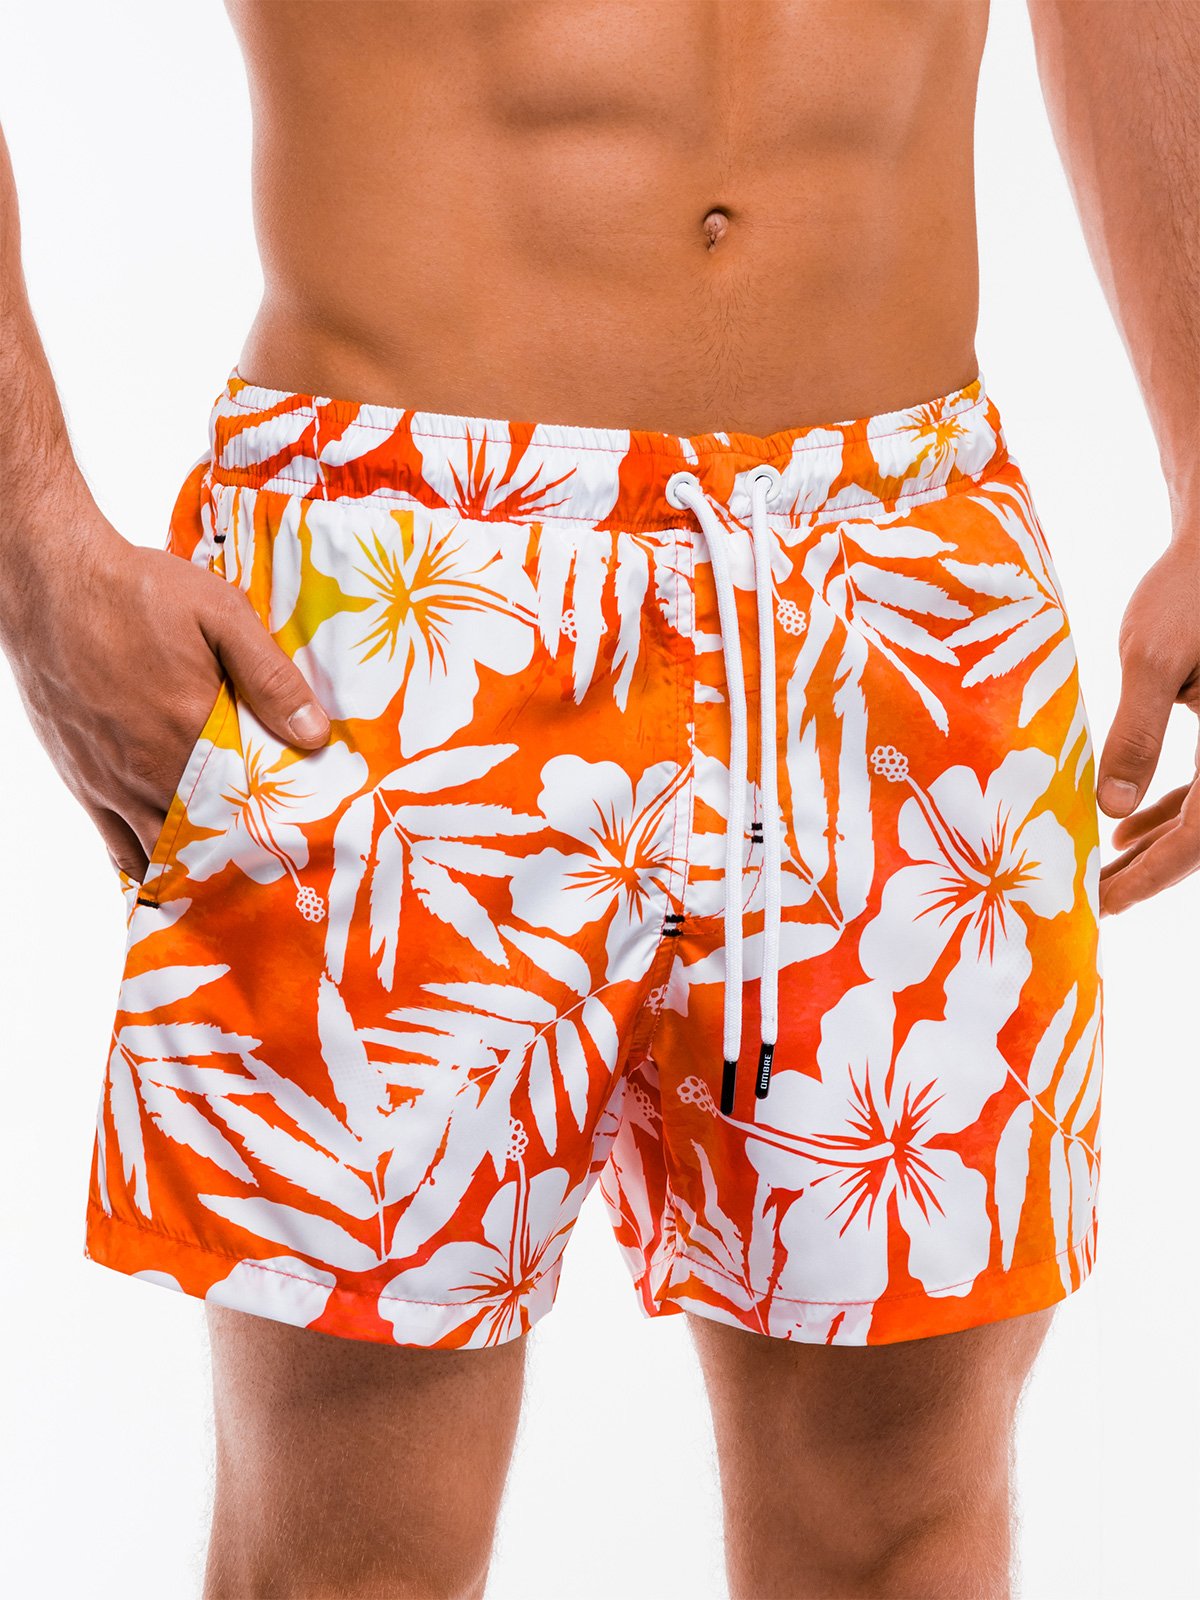 Men's swimming shorts W147 - orange | MODONE wholesale - Clothing For Men